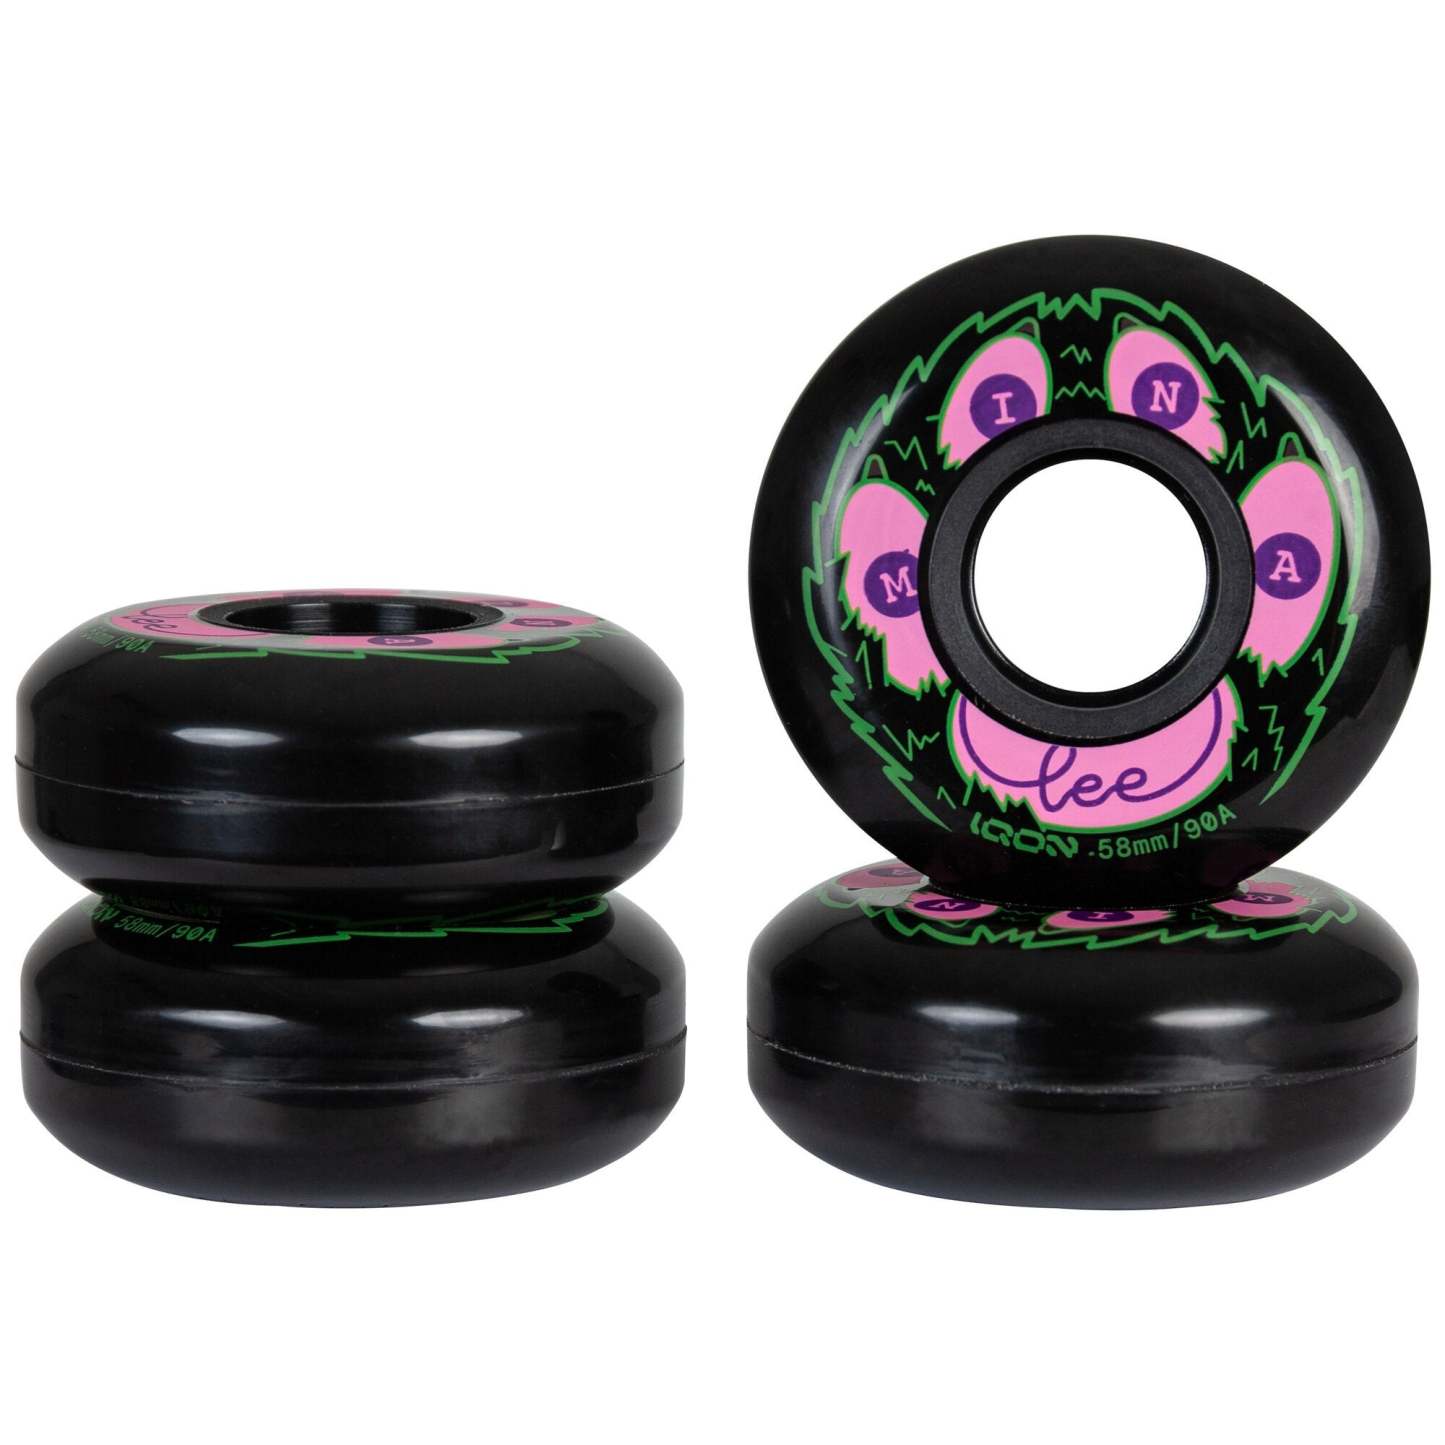 IQON - Mina 58mm/90a Aggressive Inline Skate Wheels